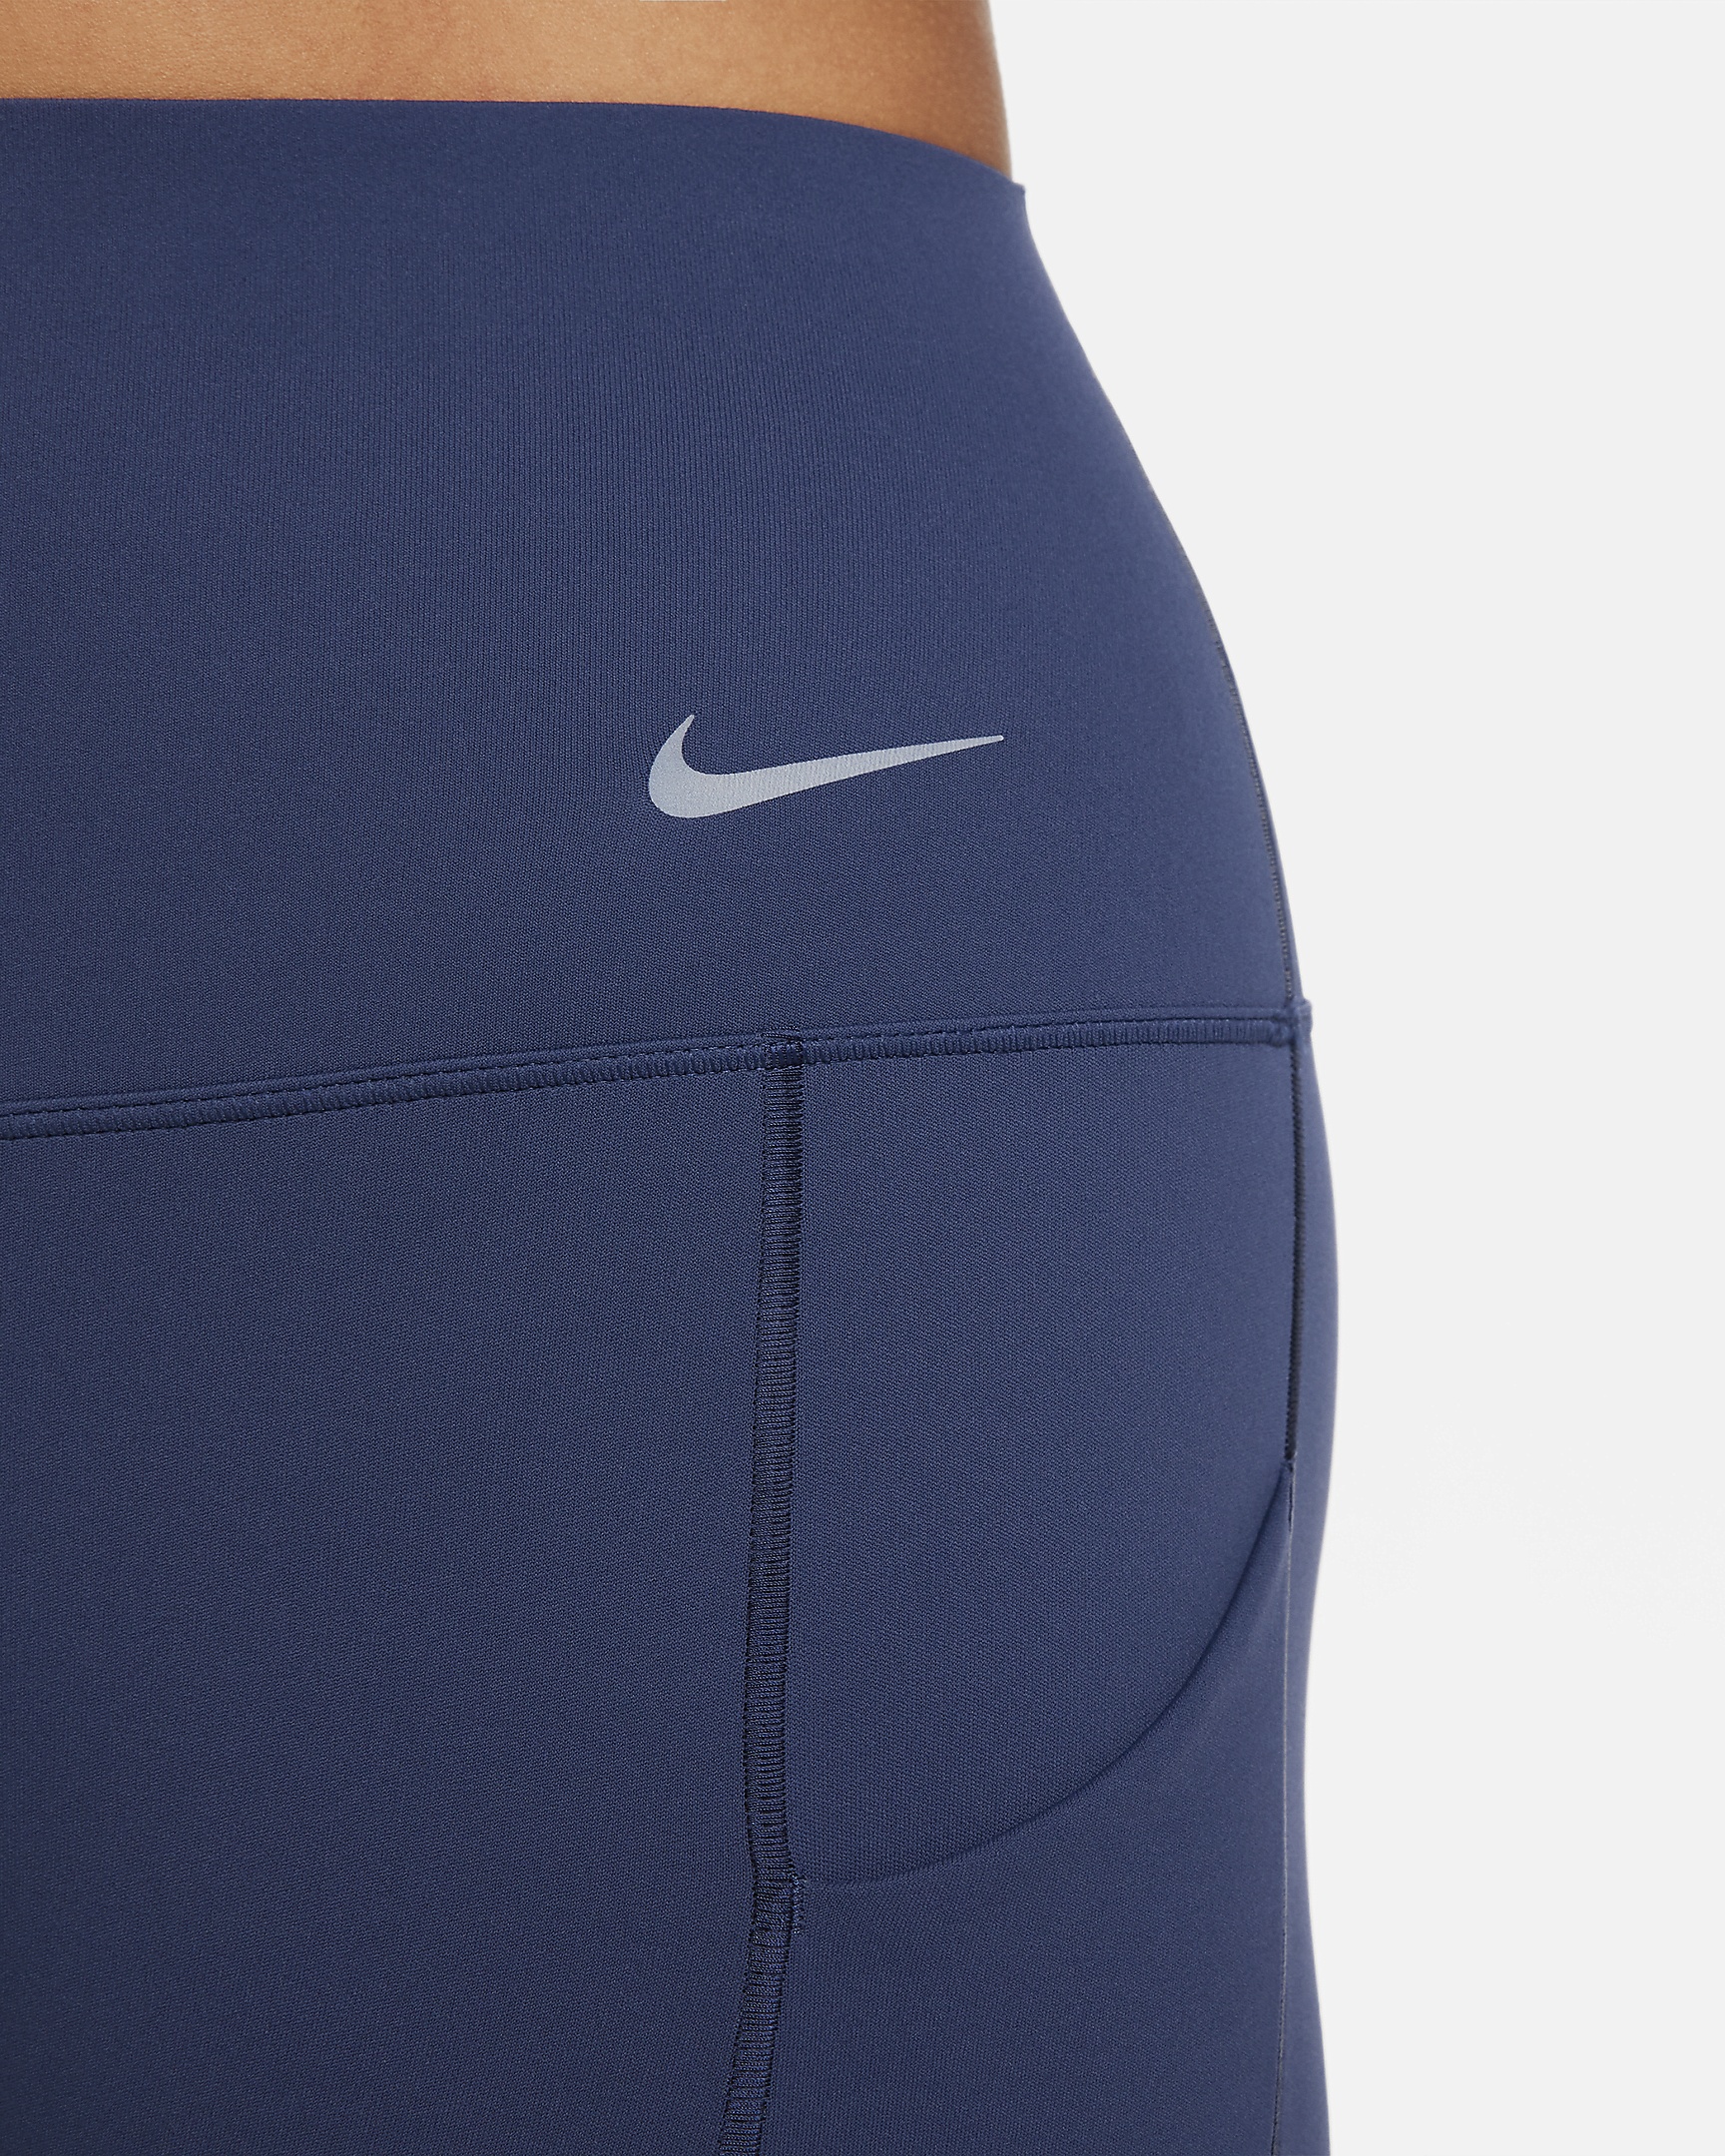 Nike Women's Universa Medium-Support High-Waisted Full-Length Leggings with Pockets - 5